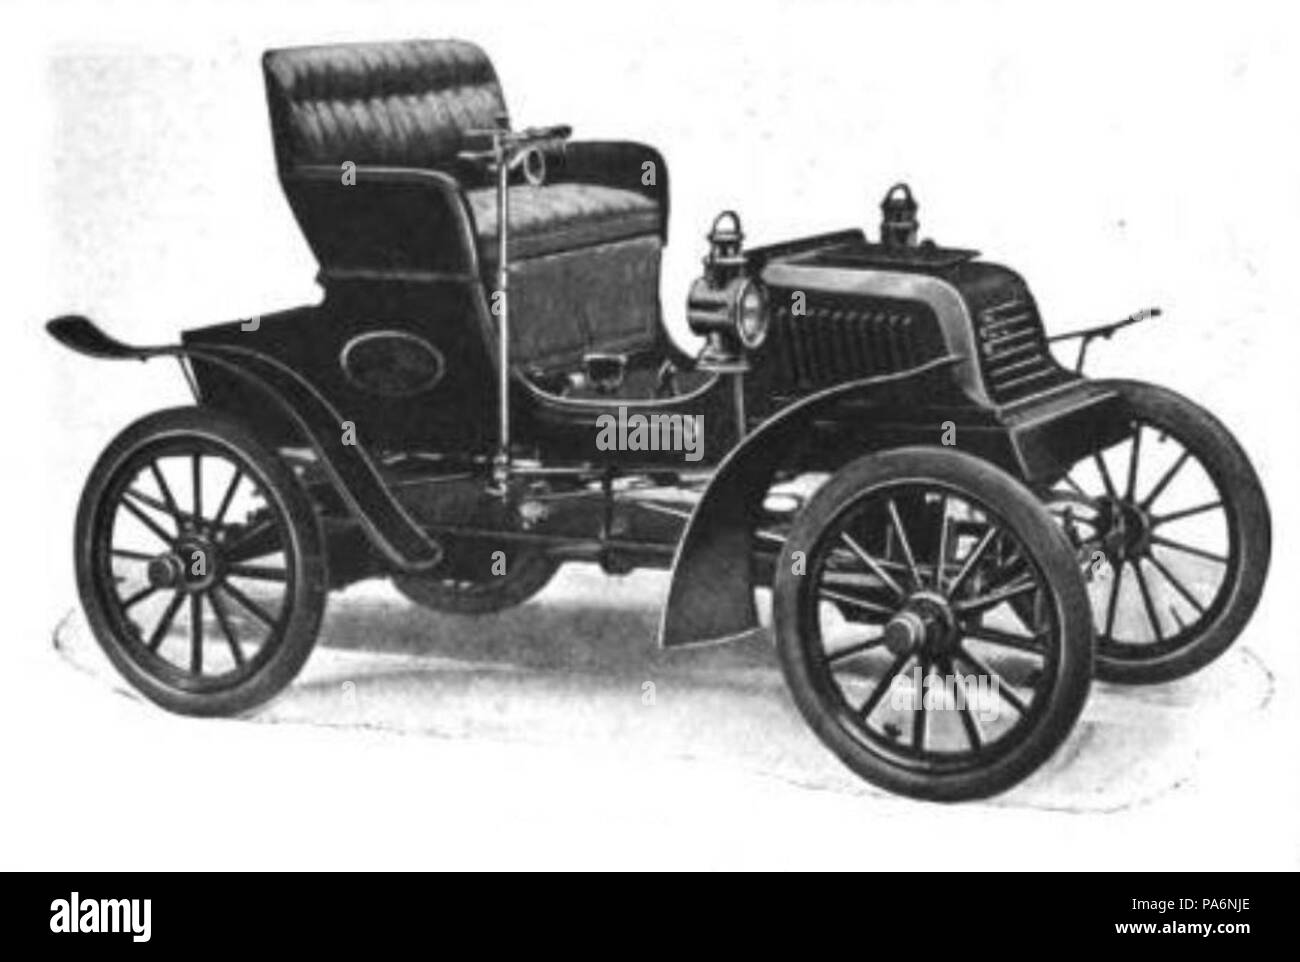 26 1903 Crestmobile adpic Stock Photo